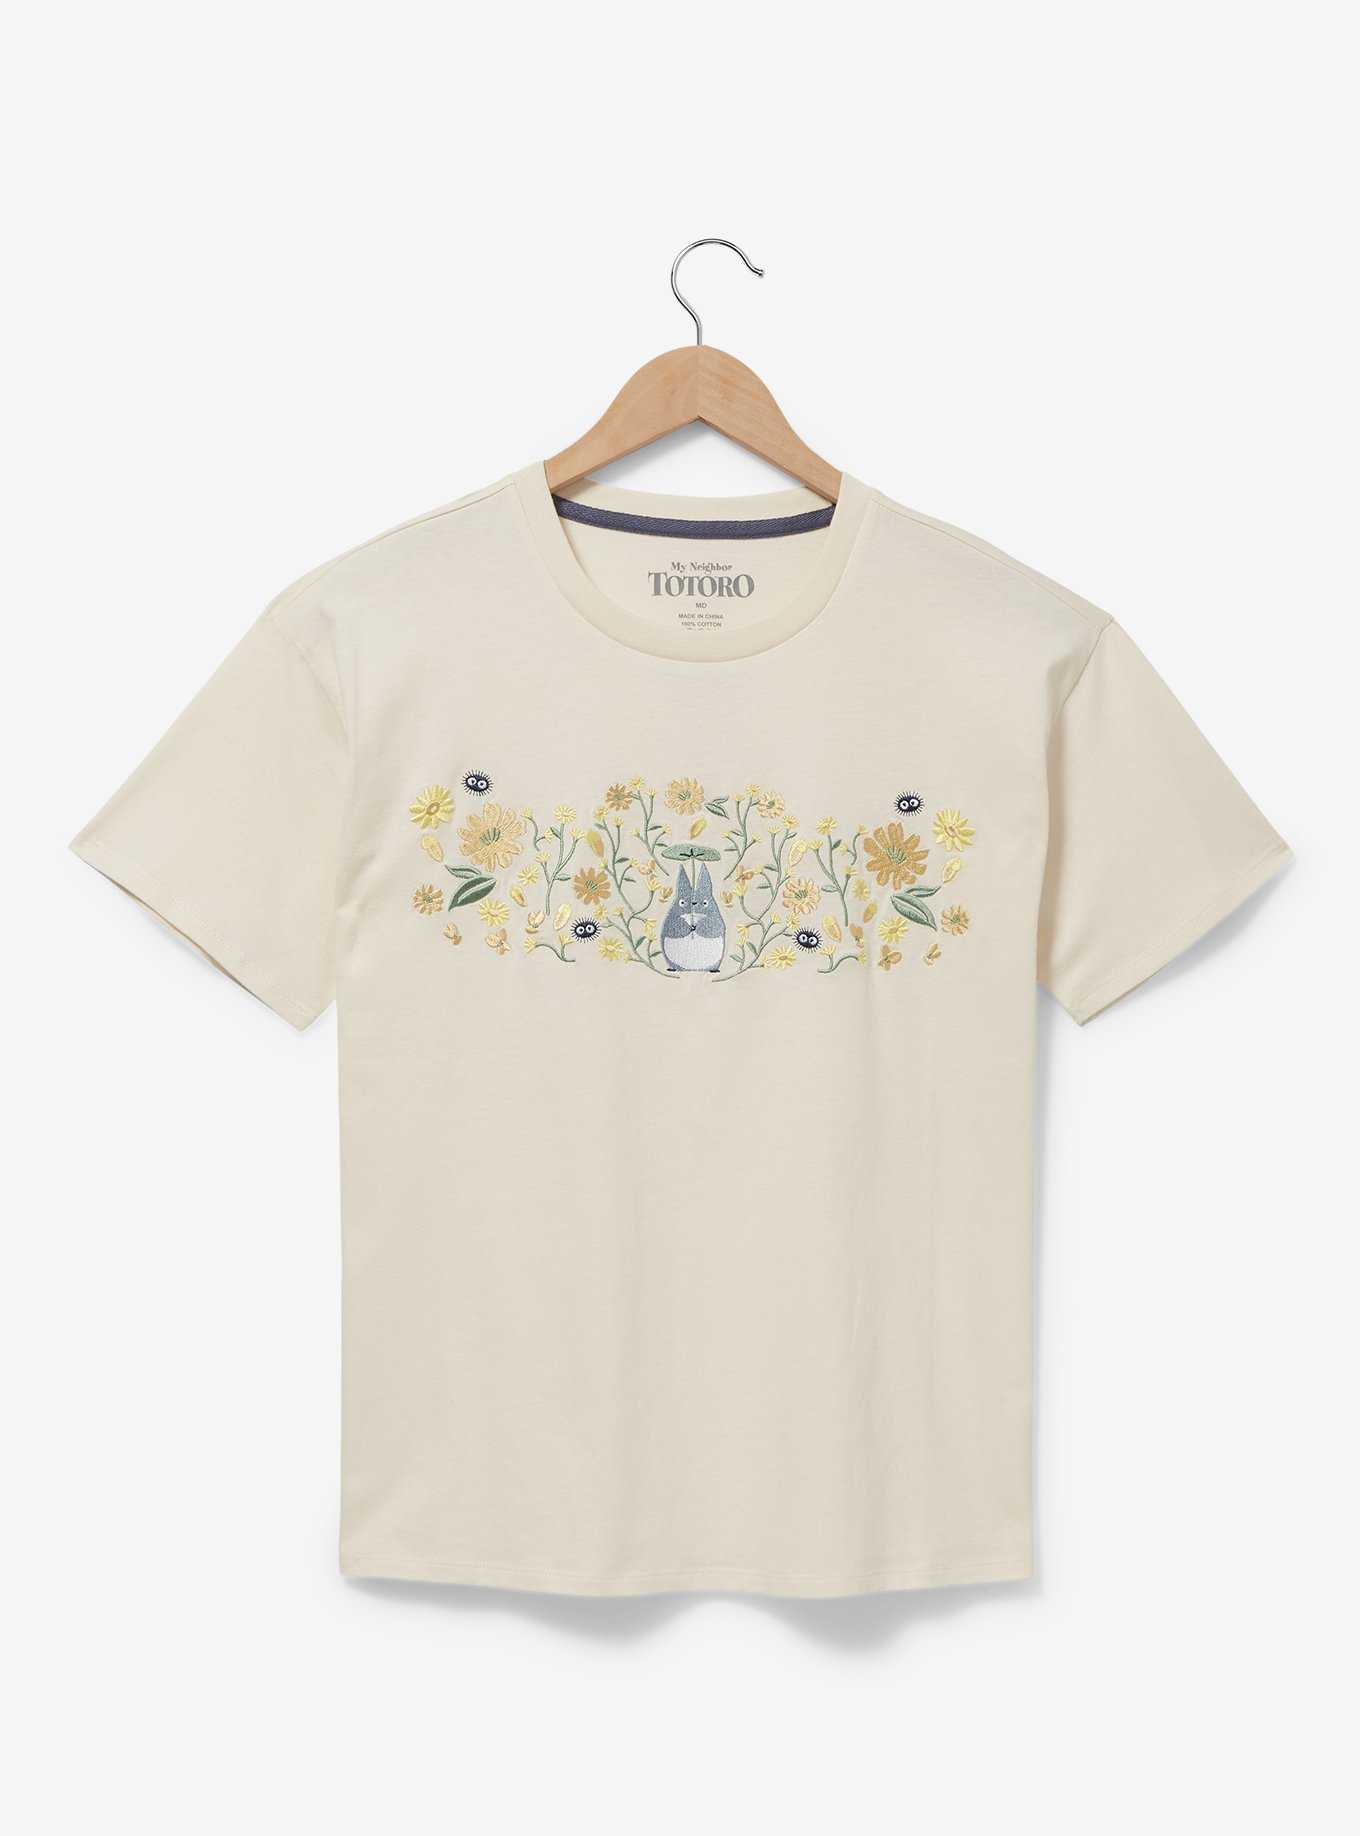 Totoro Bento Box Essential T-Shirt for Sale by dinnashop